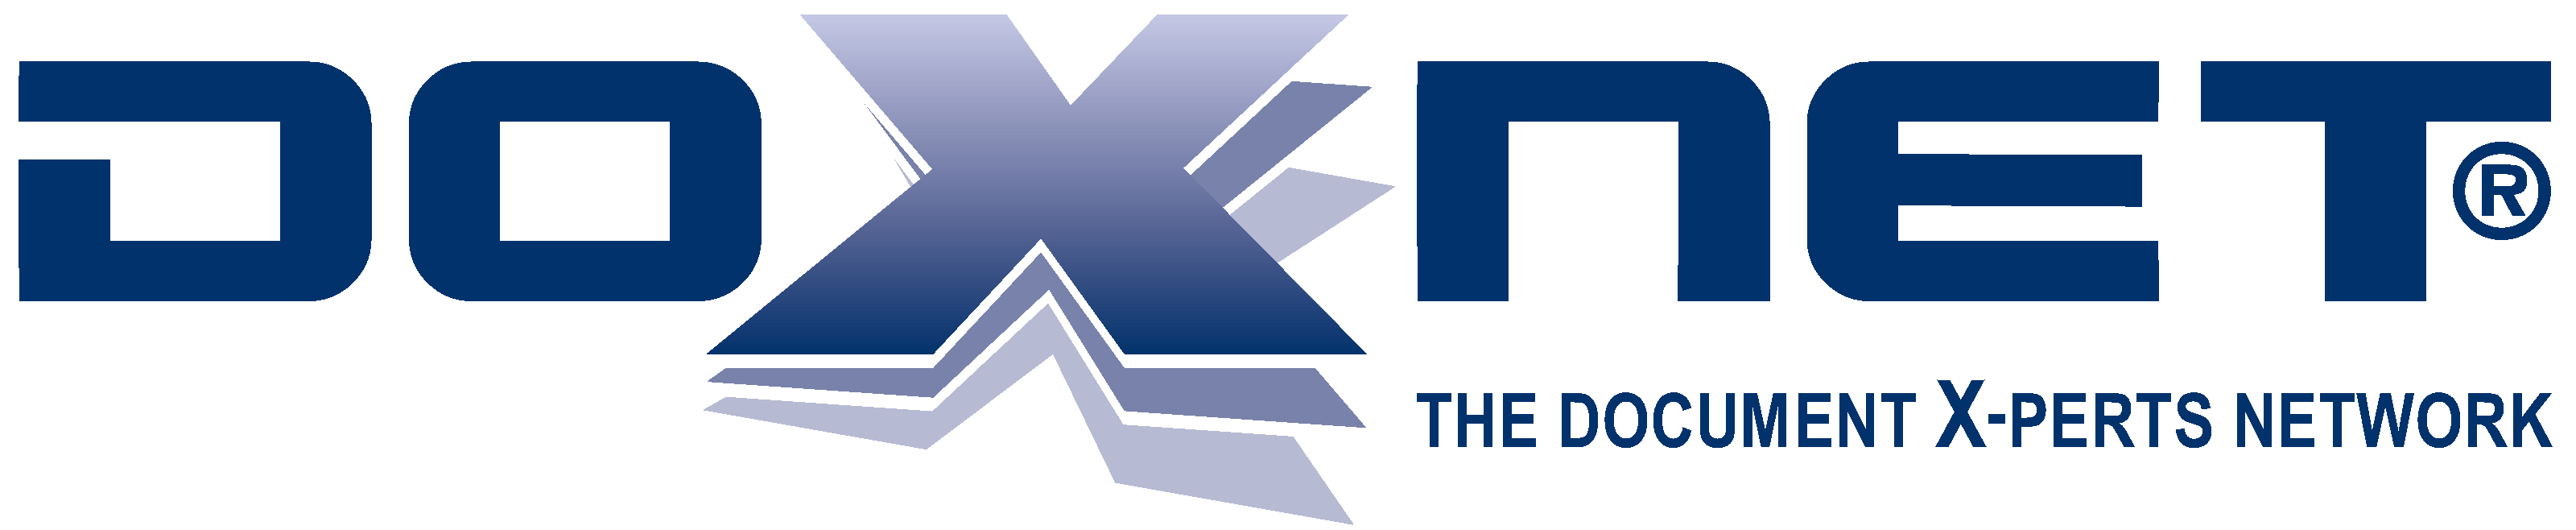 DOXNET Logo